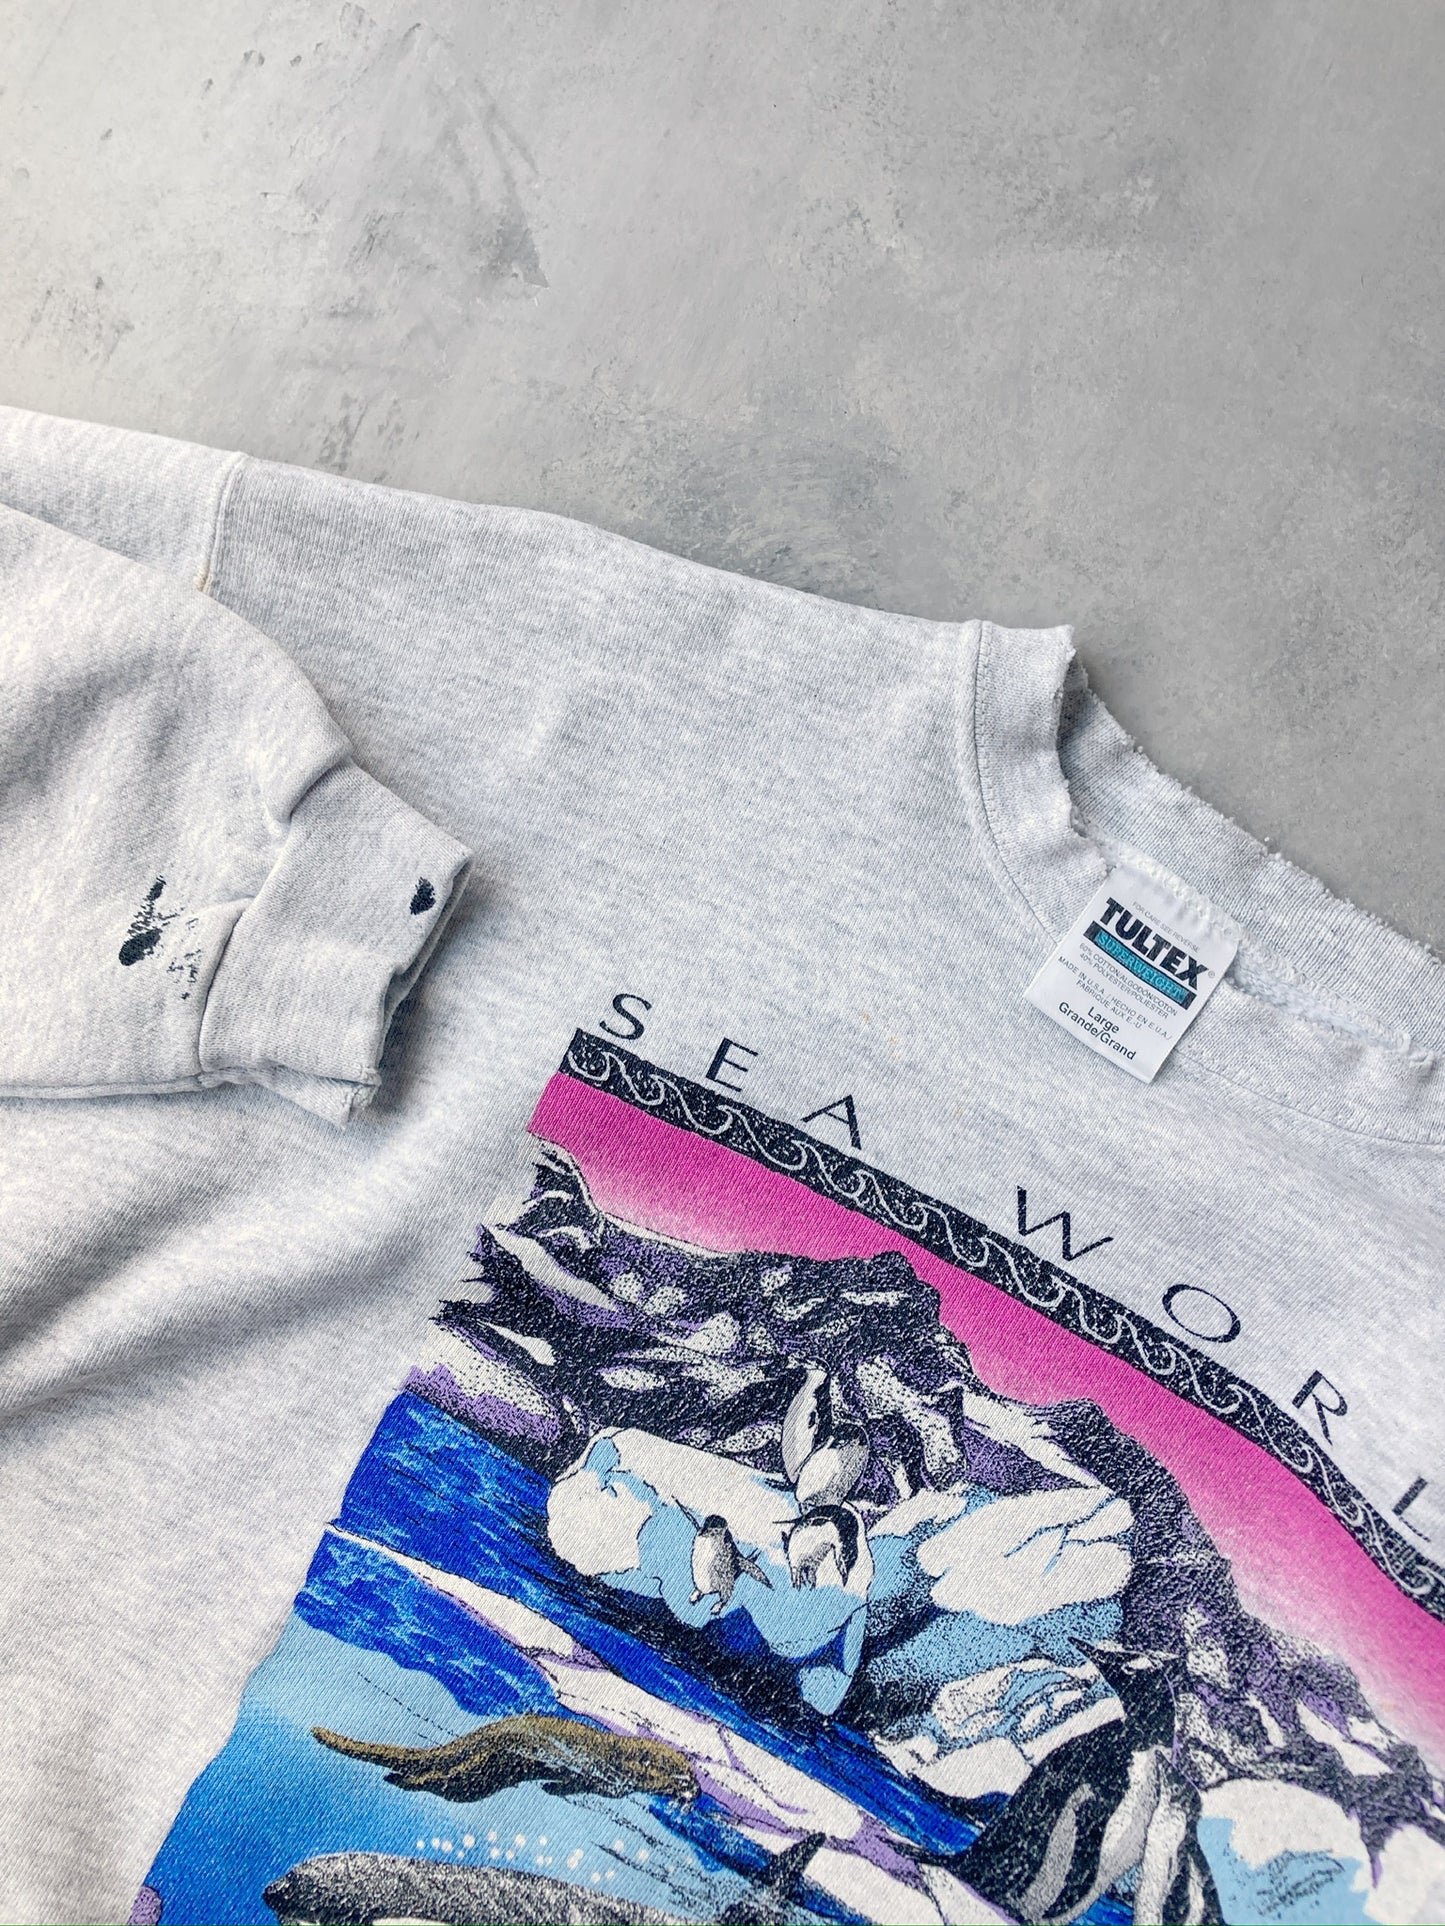 Sea World Sweatshirt 90's - Large